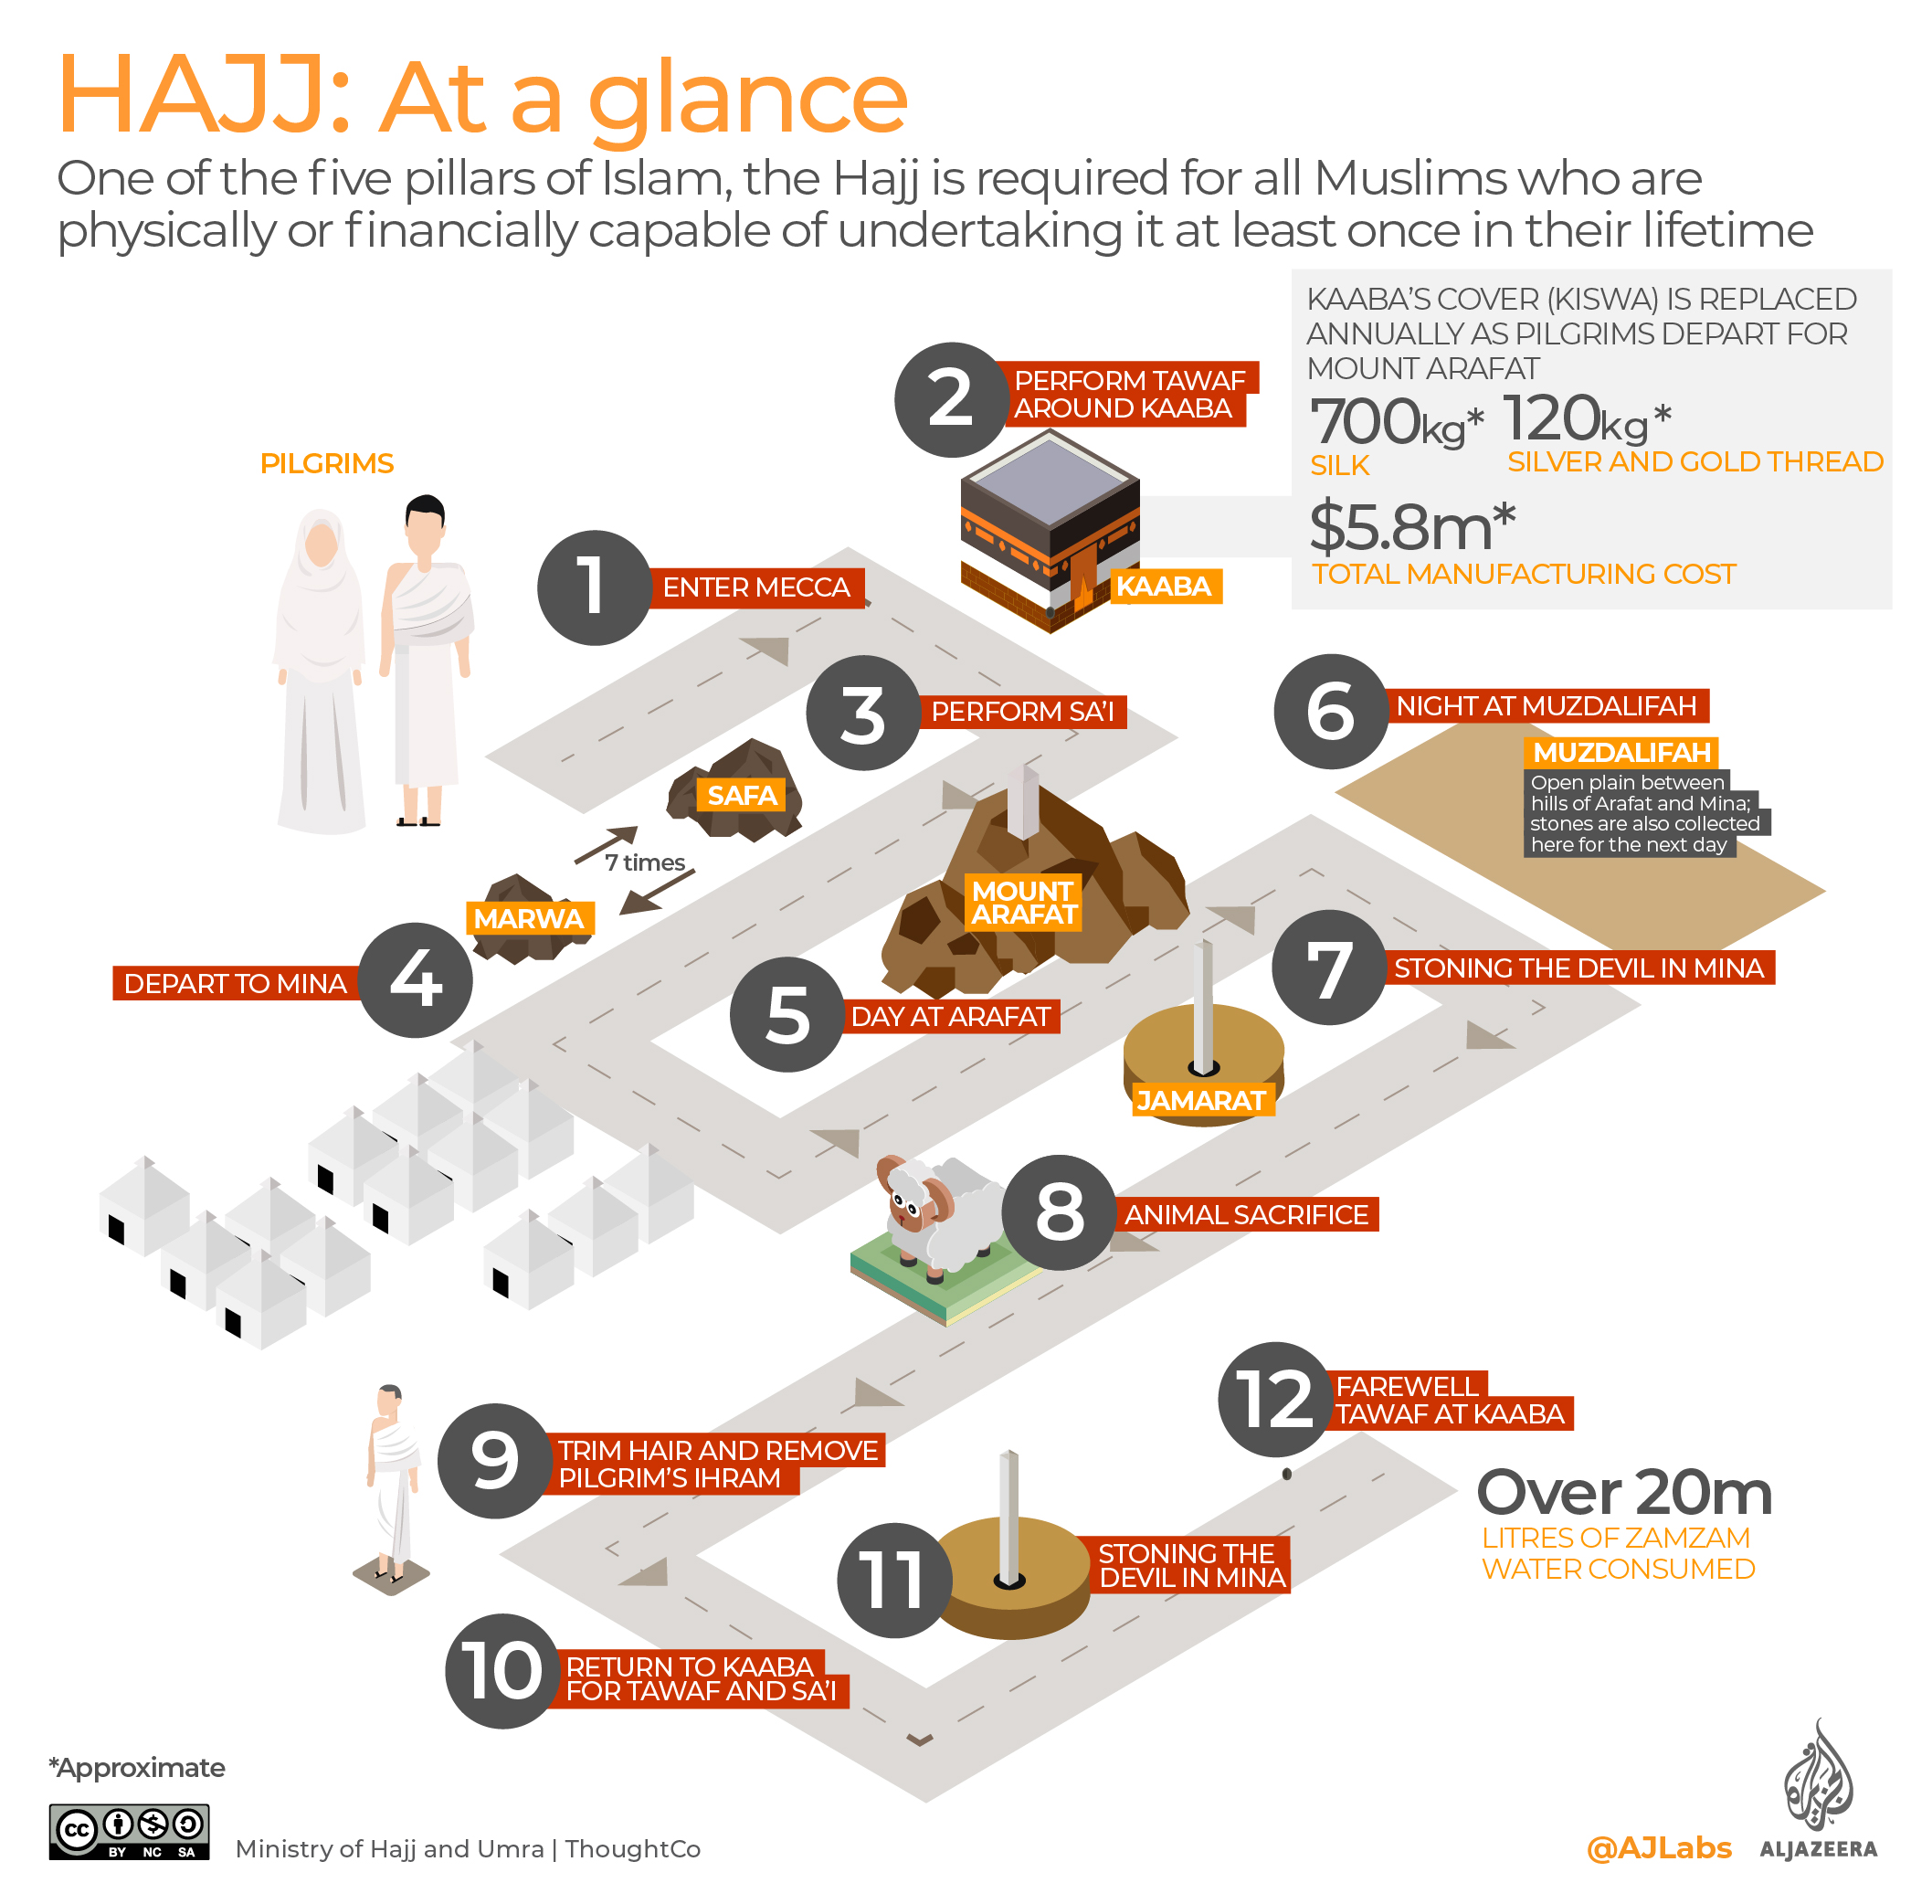 INTERACTIVE: Hajj 2020 At a glance